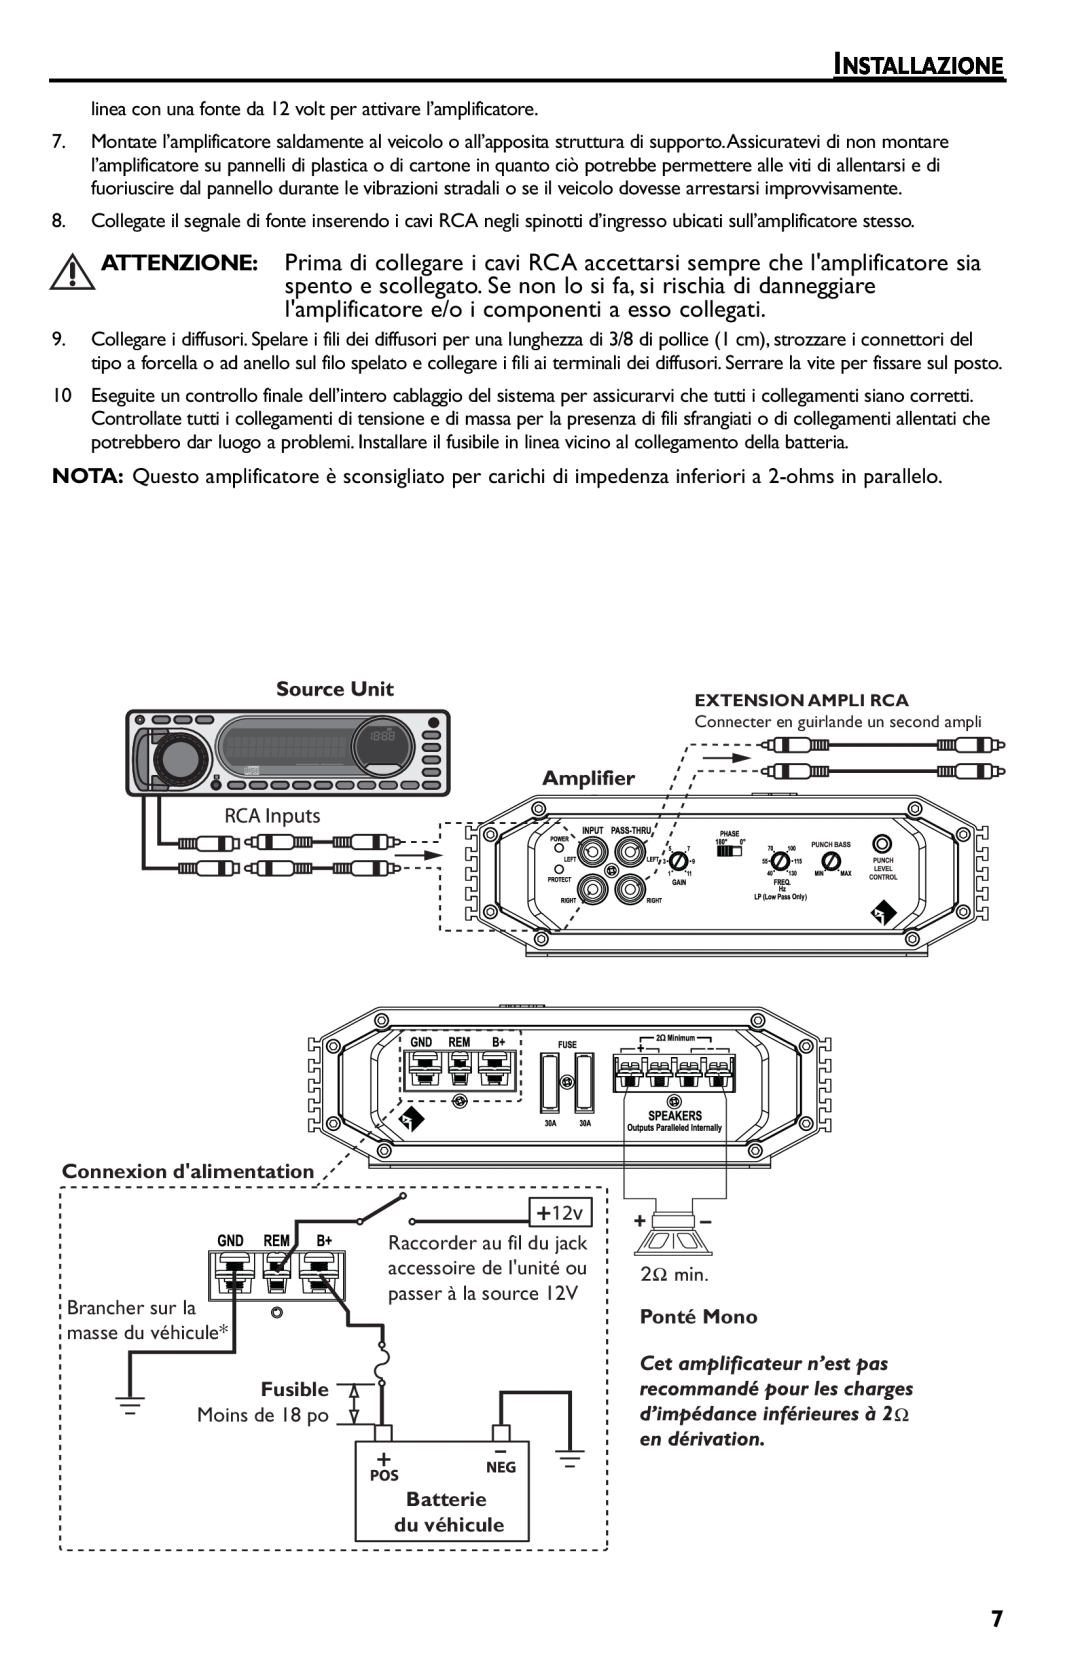 Rockford Fosgate R500-1 manual Extension Ampli Rca, Installazione, Connexion dalimentation, Batterie du véhicule 